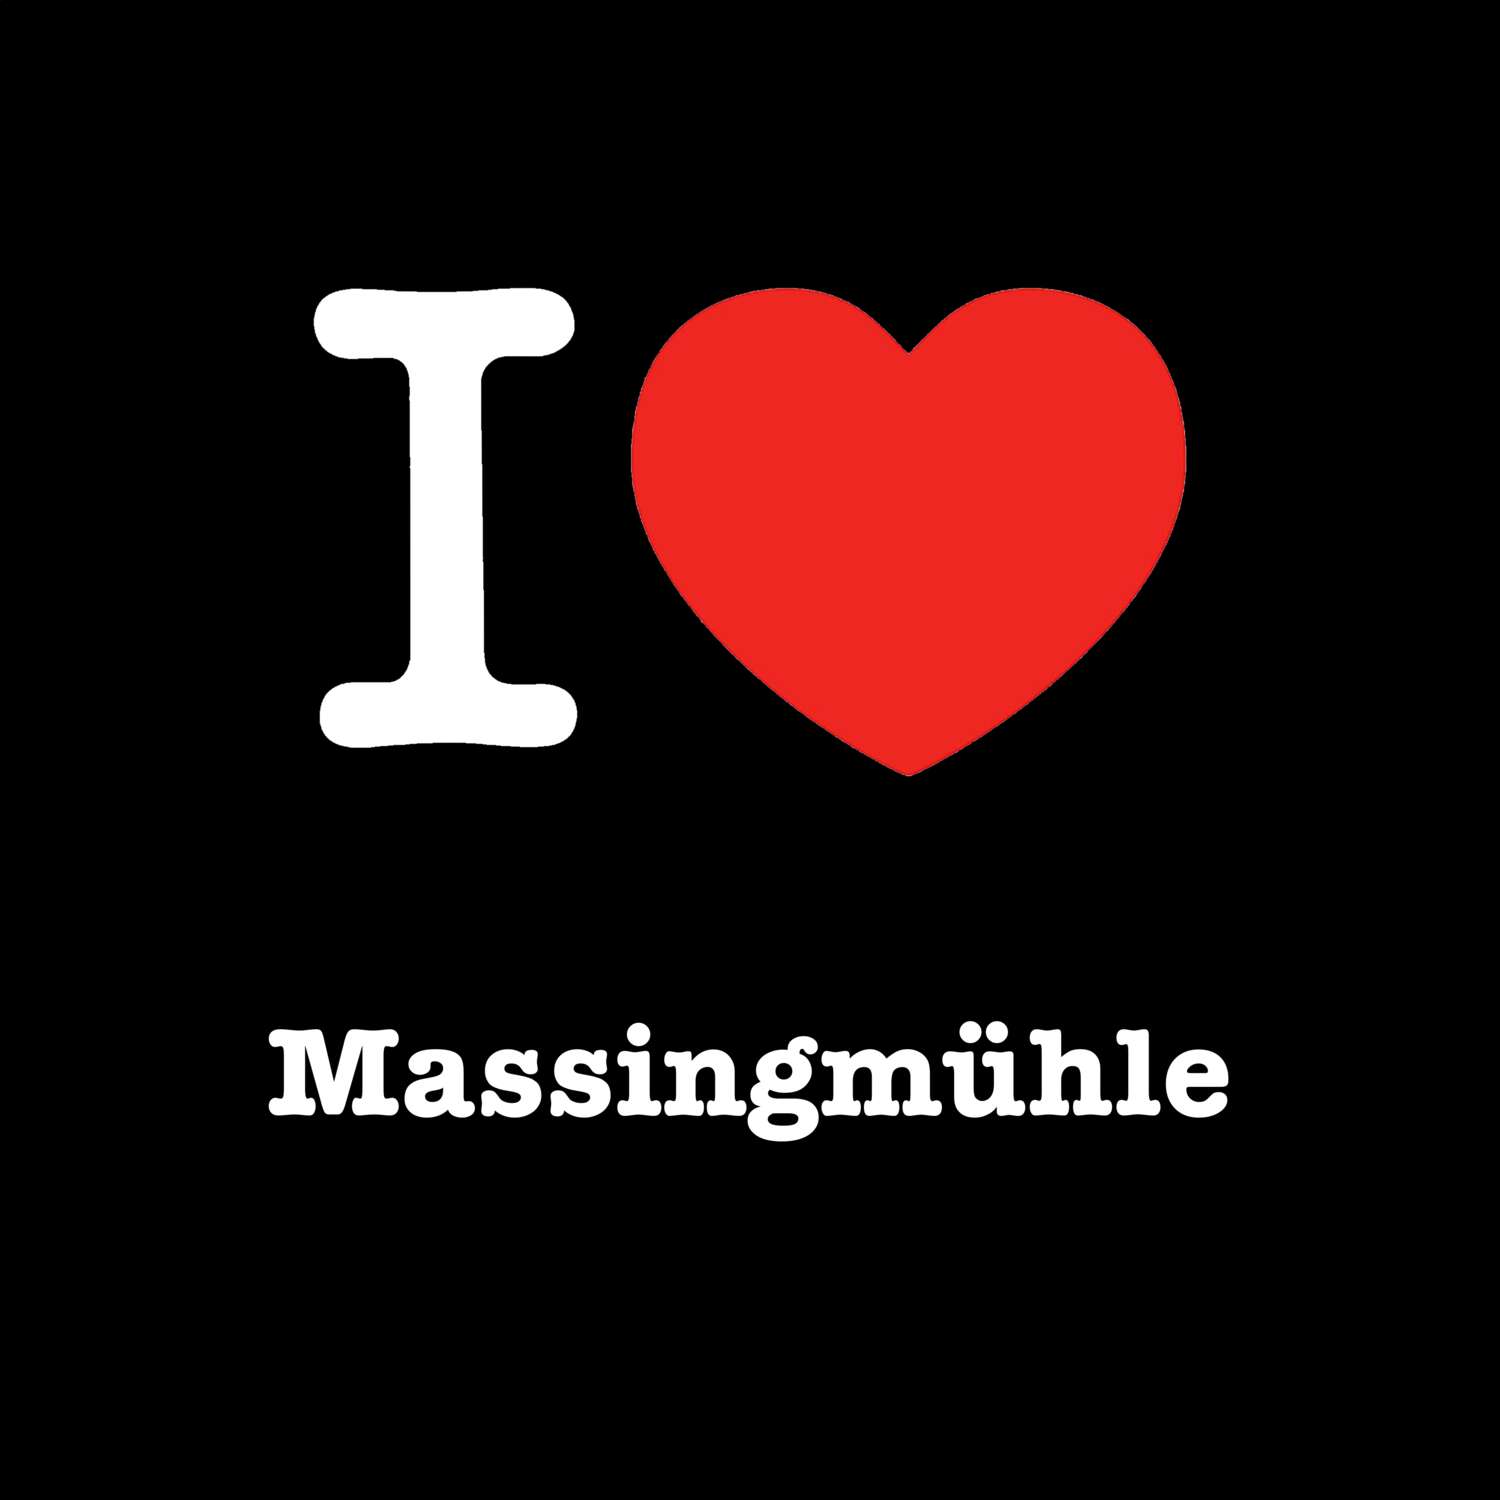 Massingmühle T-Shirt »I love«